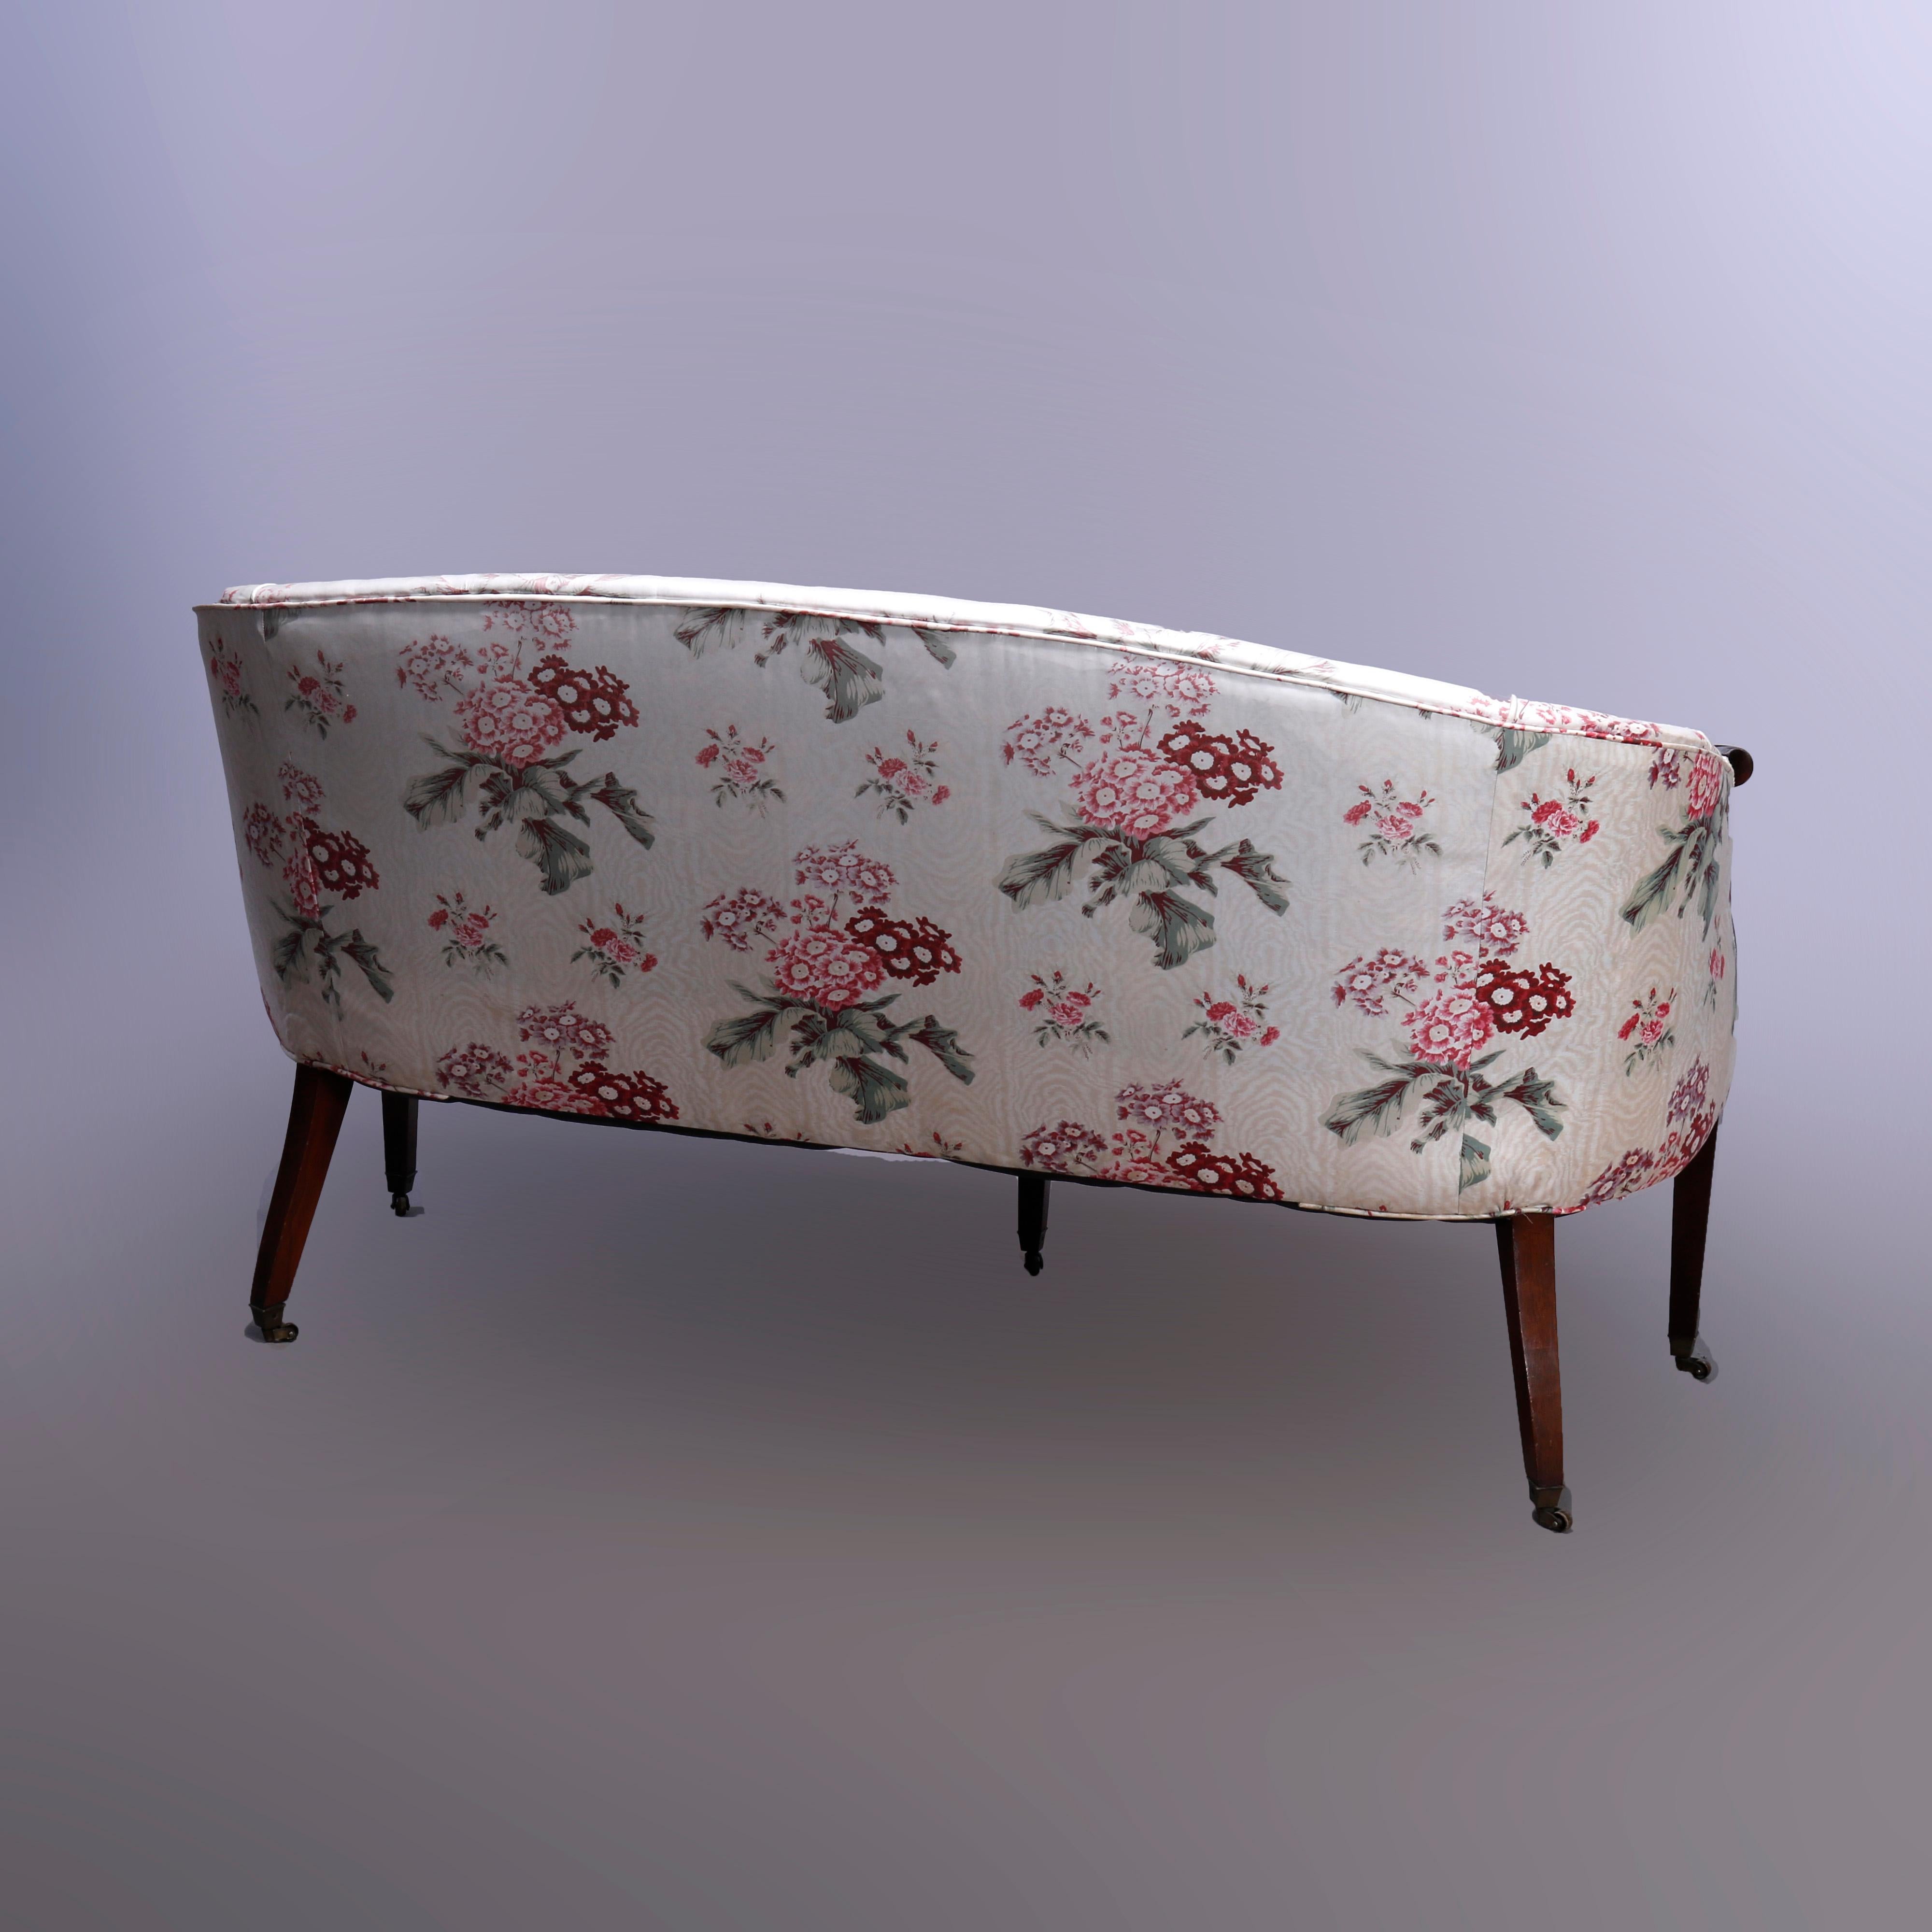 20th Century Antique Hepplewhite Style Upholstered Mahogany Settee Sofa circa 1930